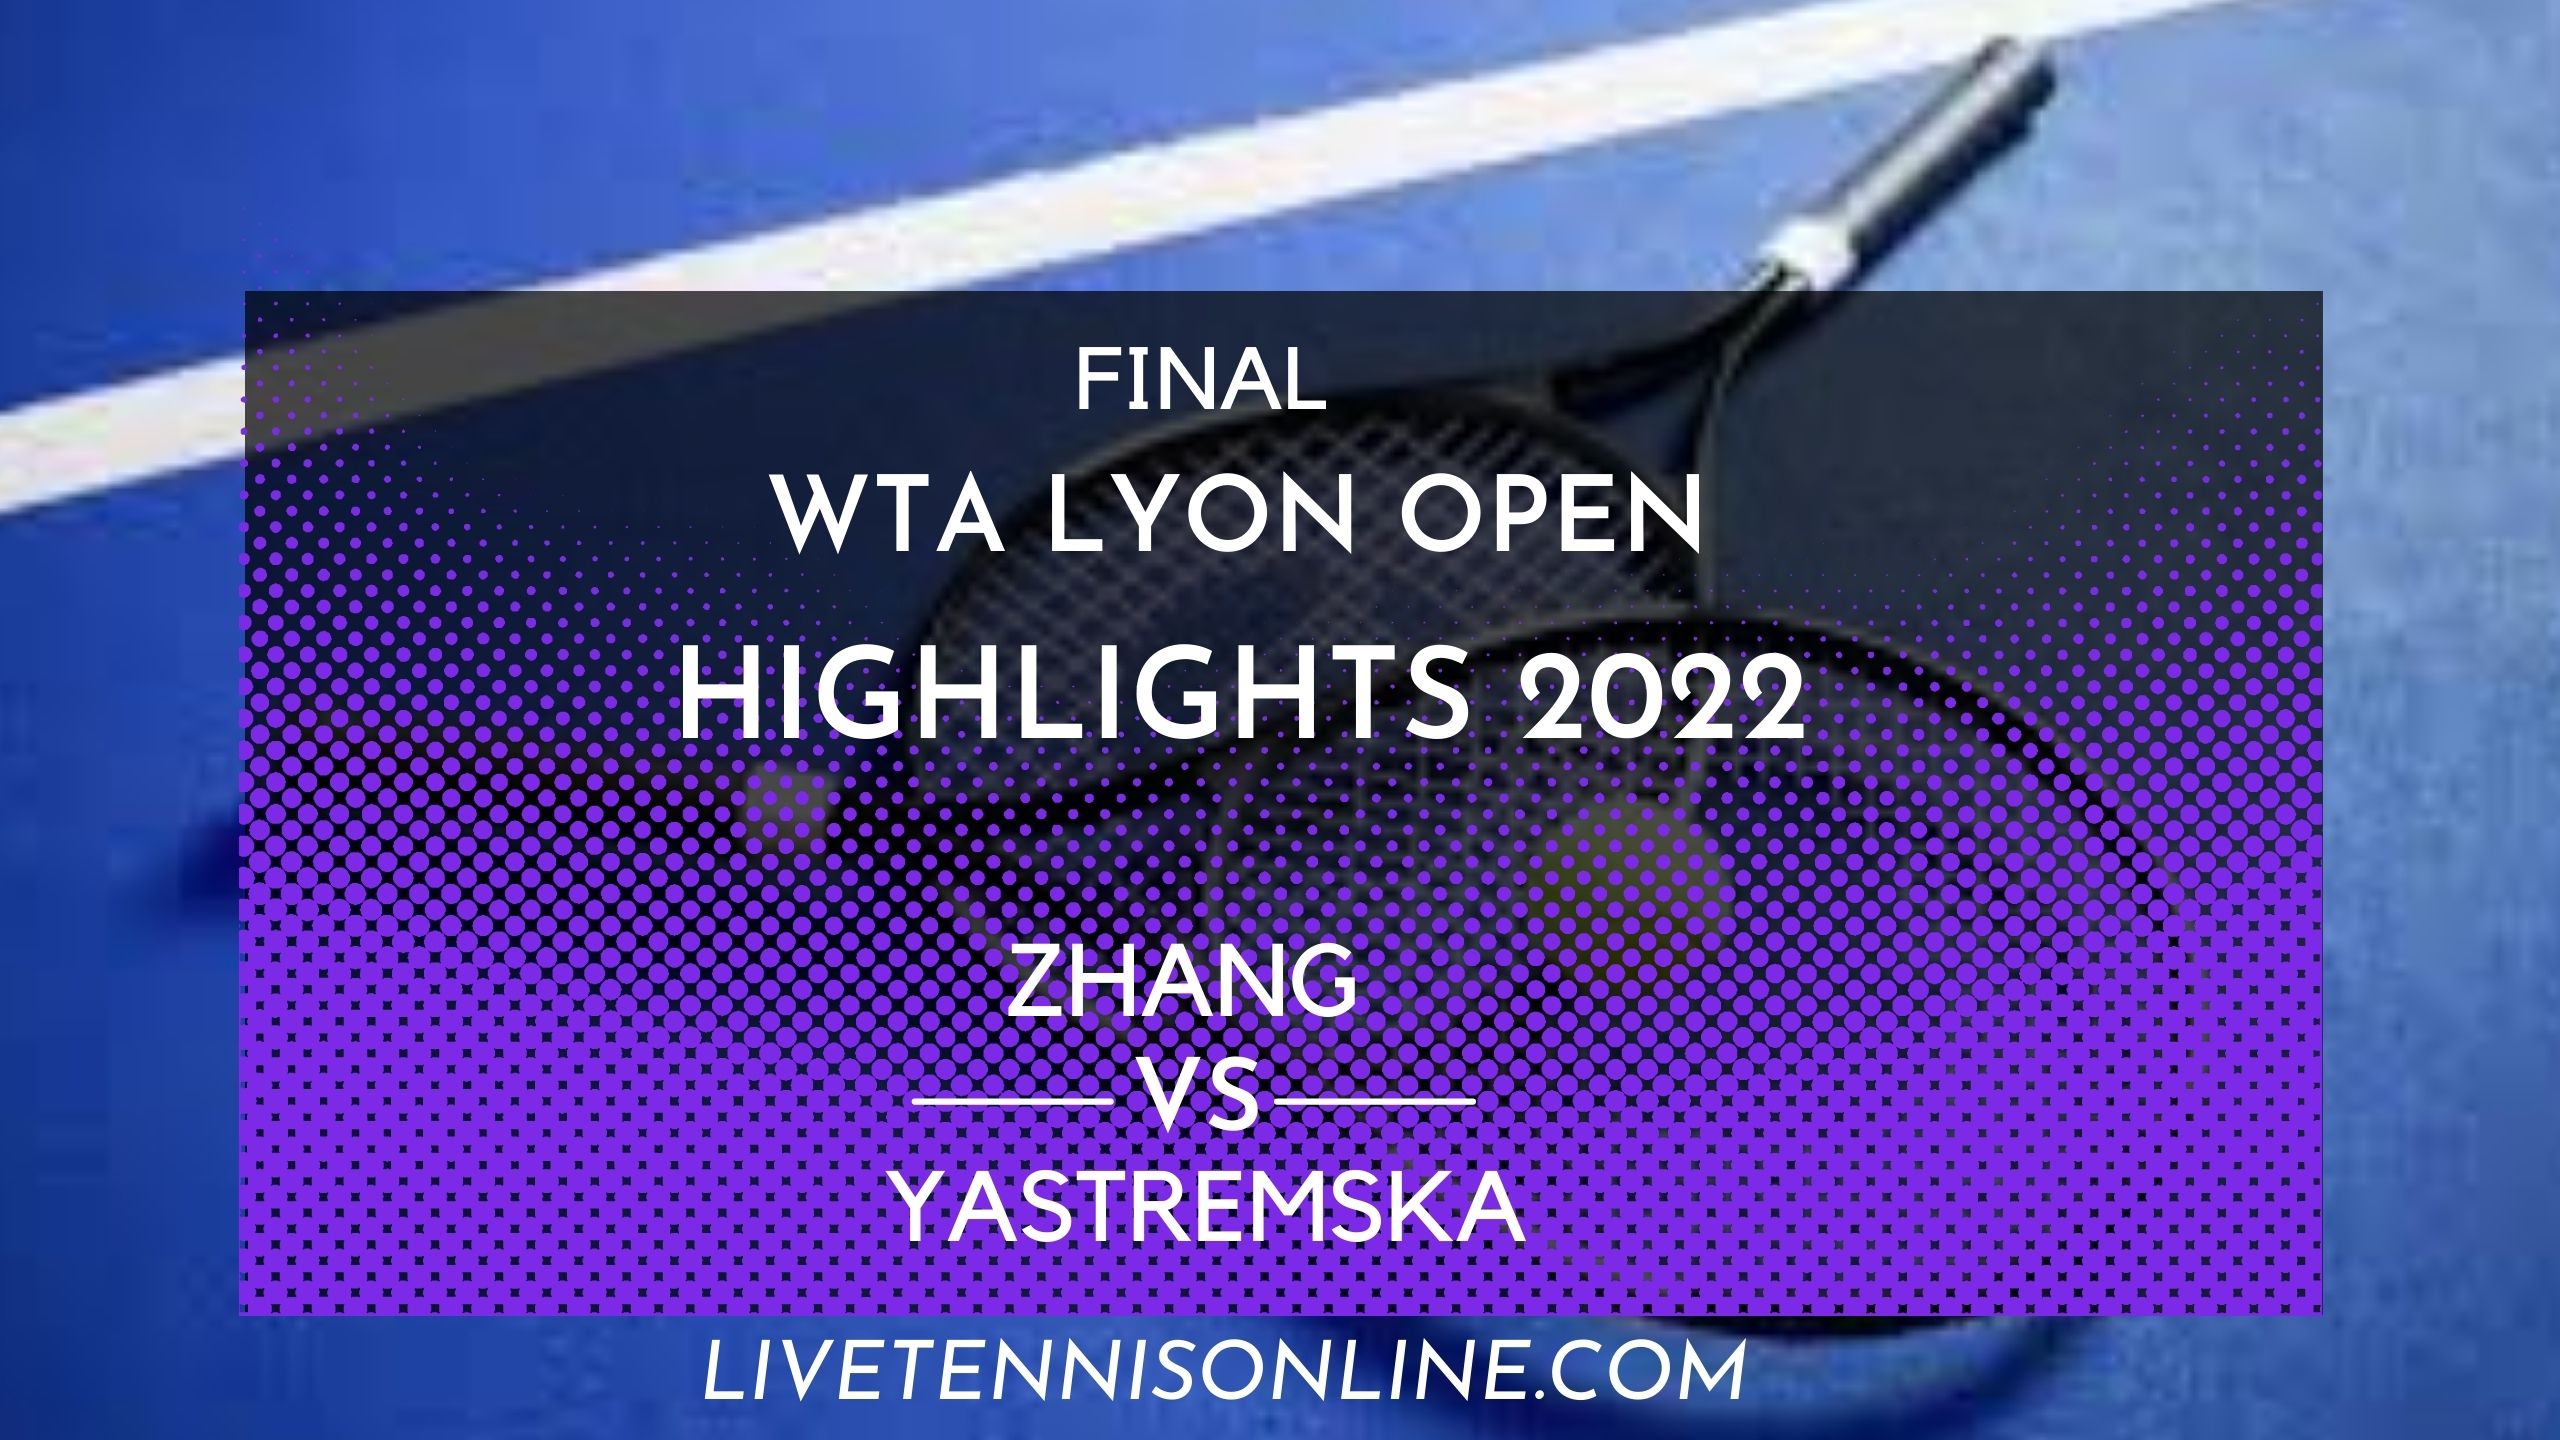 Zhang Vs Yastremska Final Highlights 2022